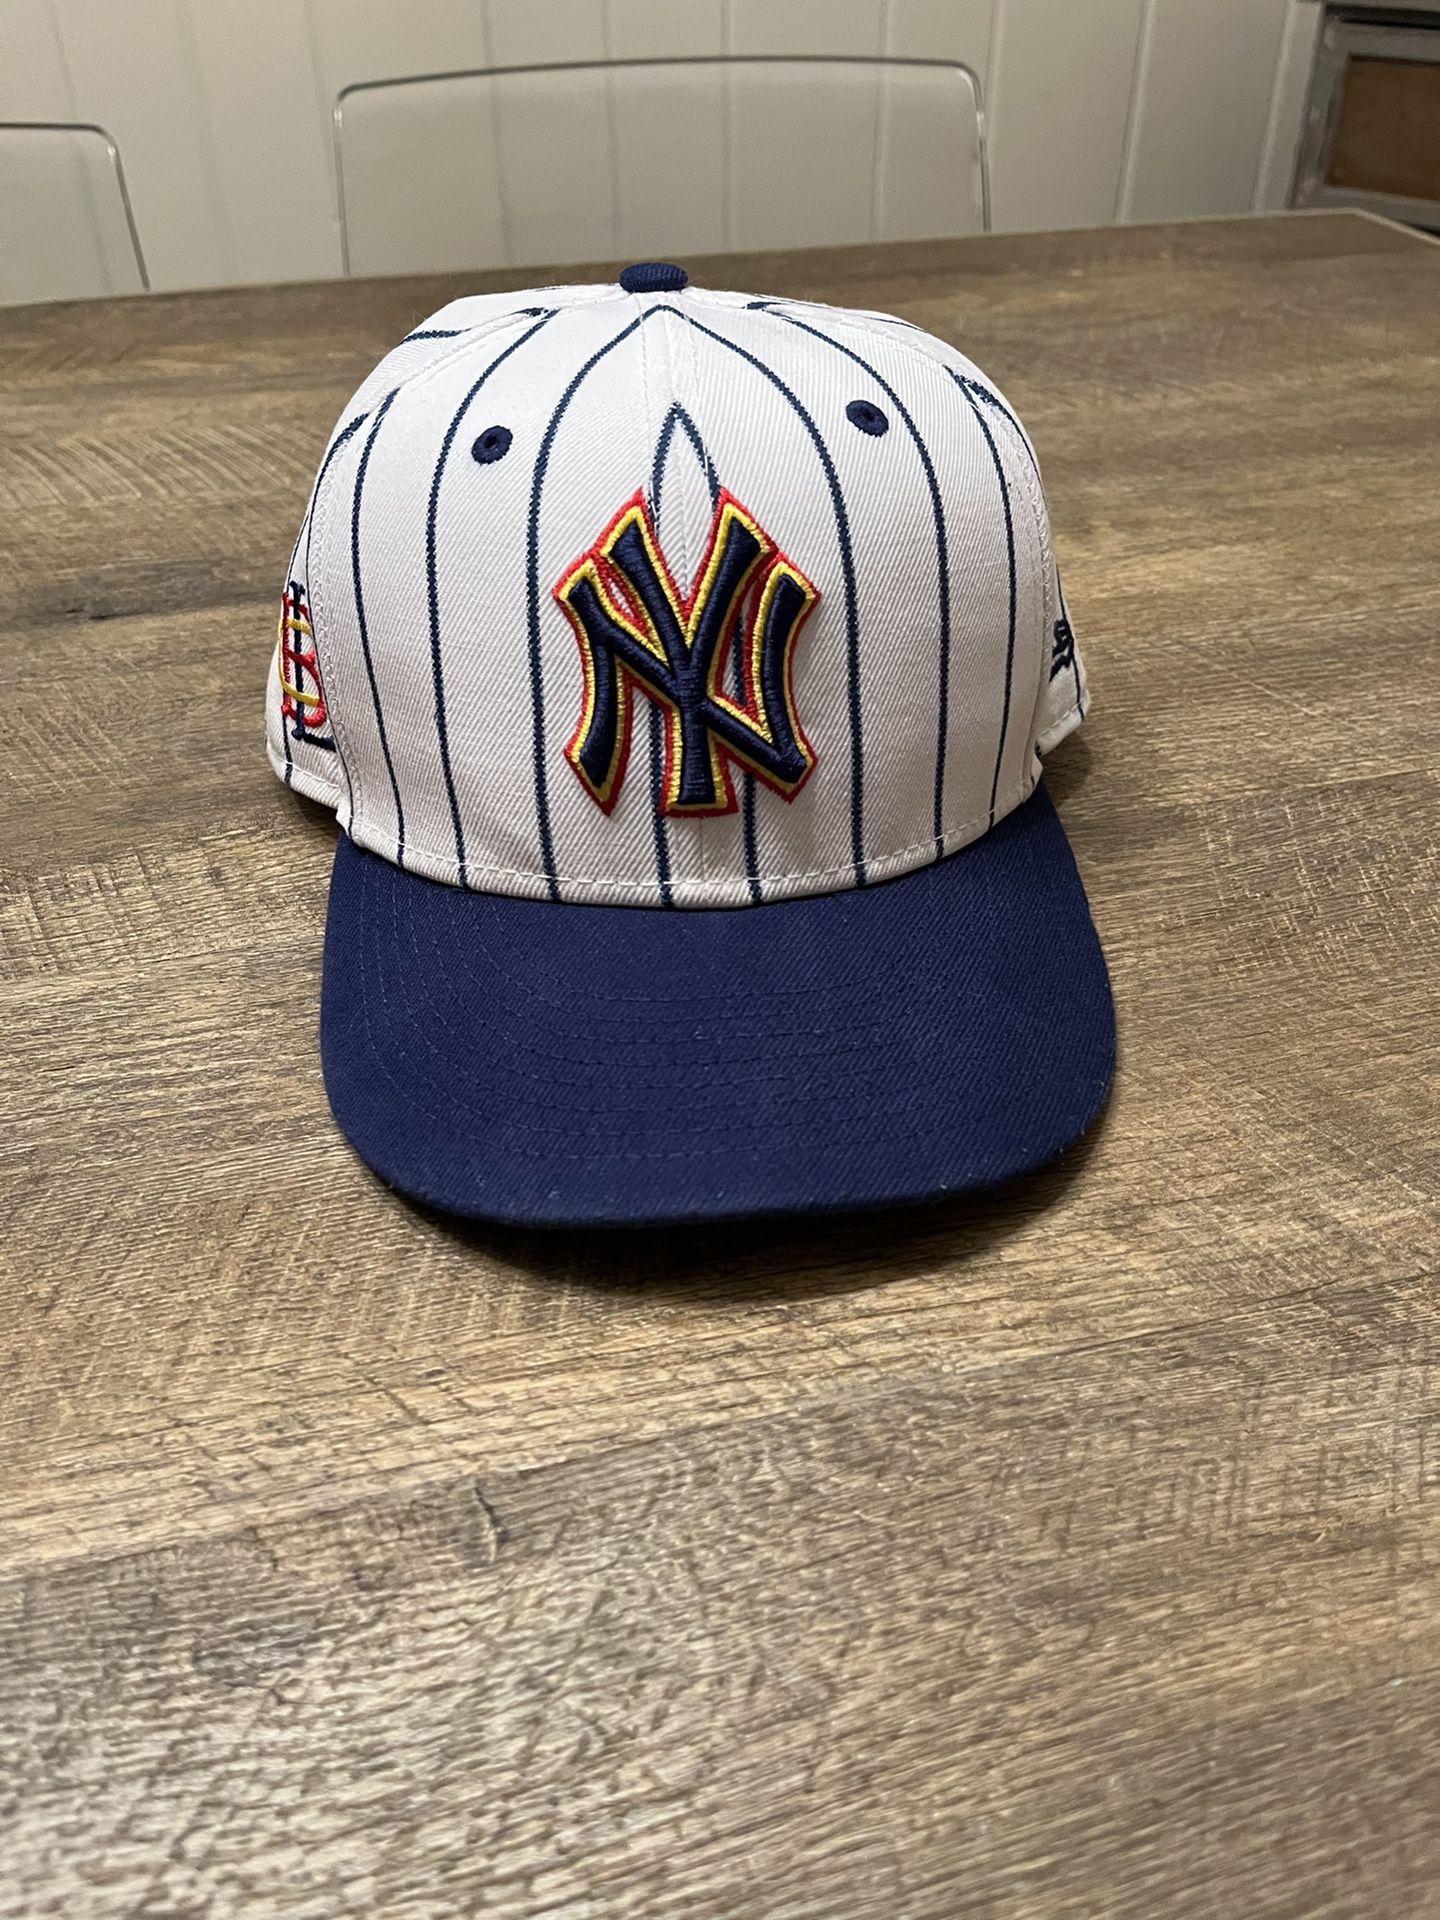 Big League Chew Yankees Fitted Hat for Sale in Glen Ridge, NJ